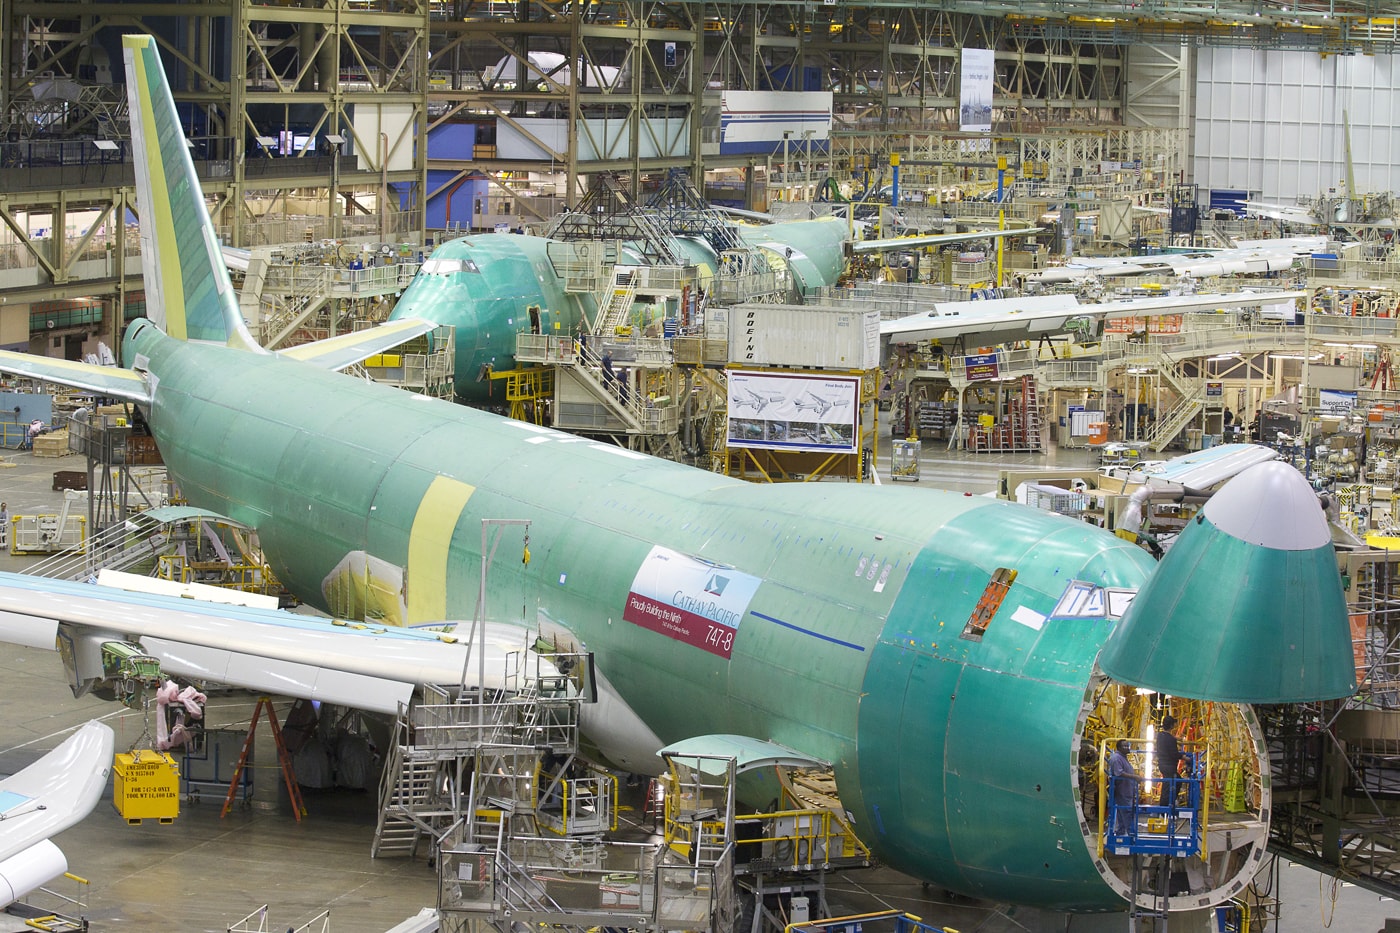 Boeing 747 jumbo jet discontinued after 50 year run air cargo sutter factory news info